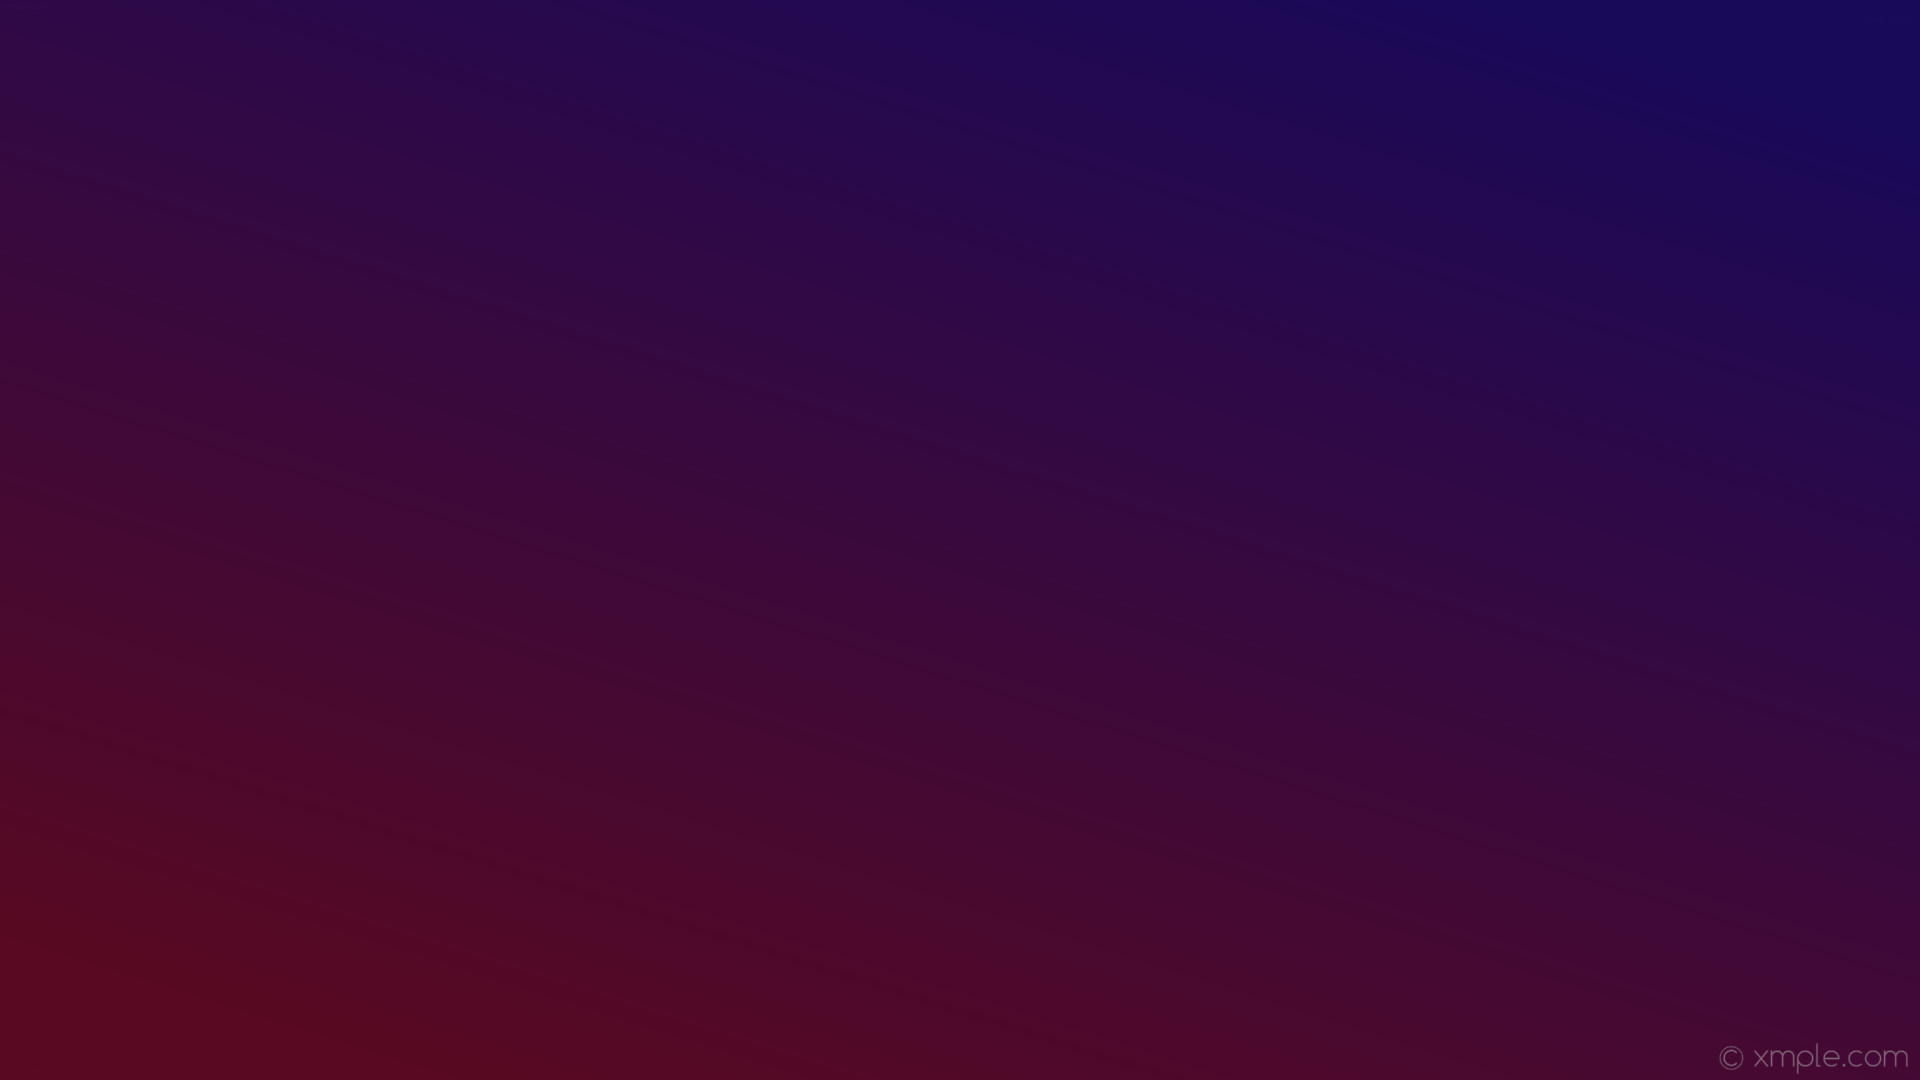 1920x1080 wallpaper linear pink blue gradient dark blue dark pink #190959 #590921 45Â°